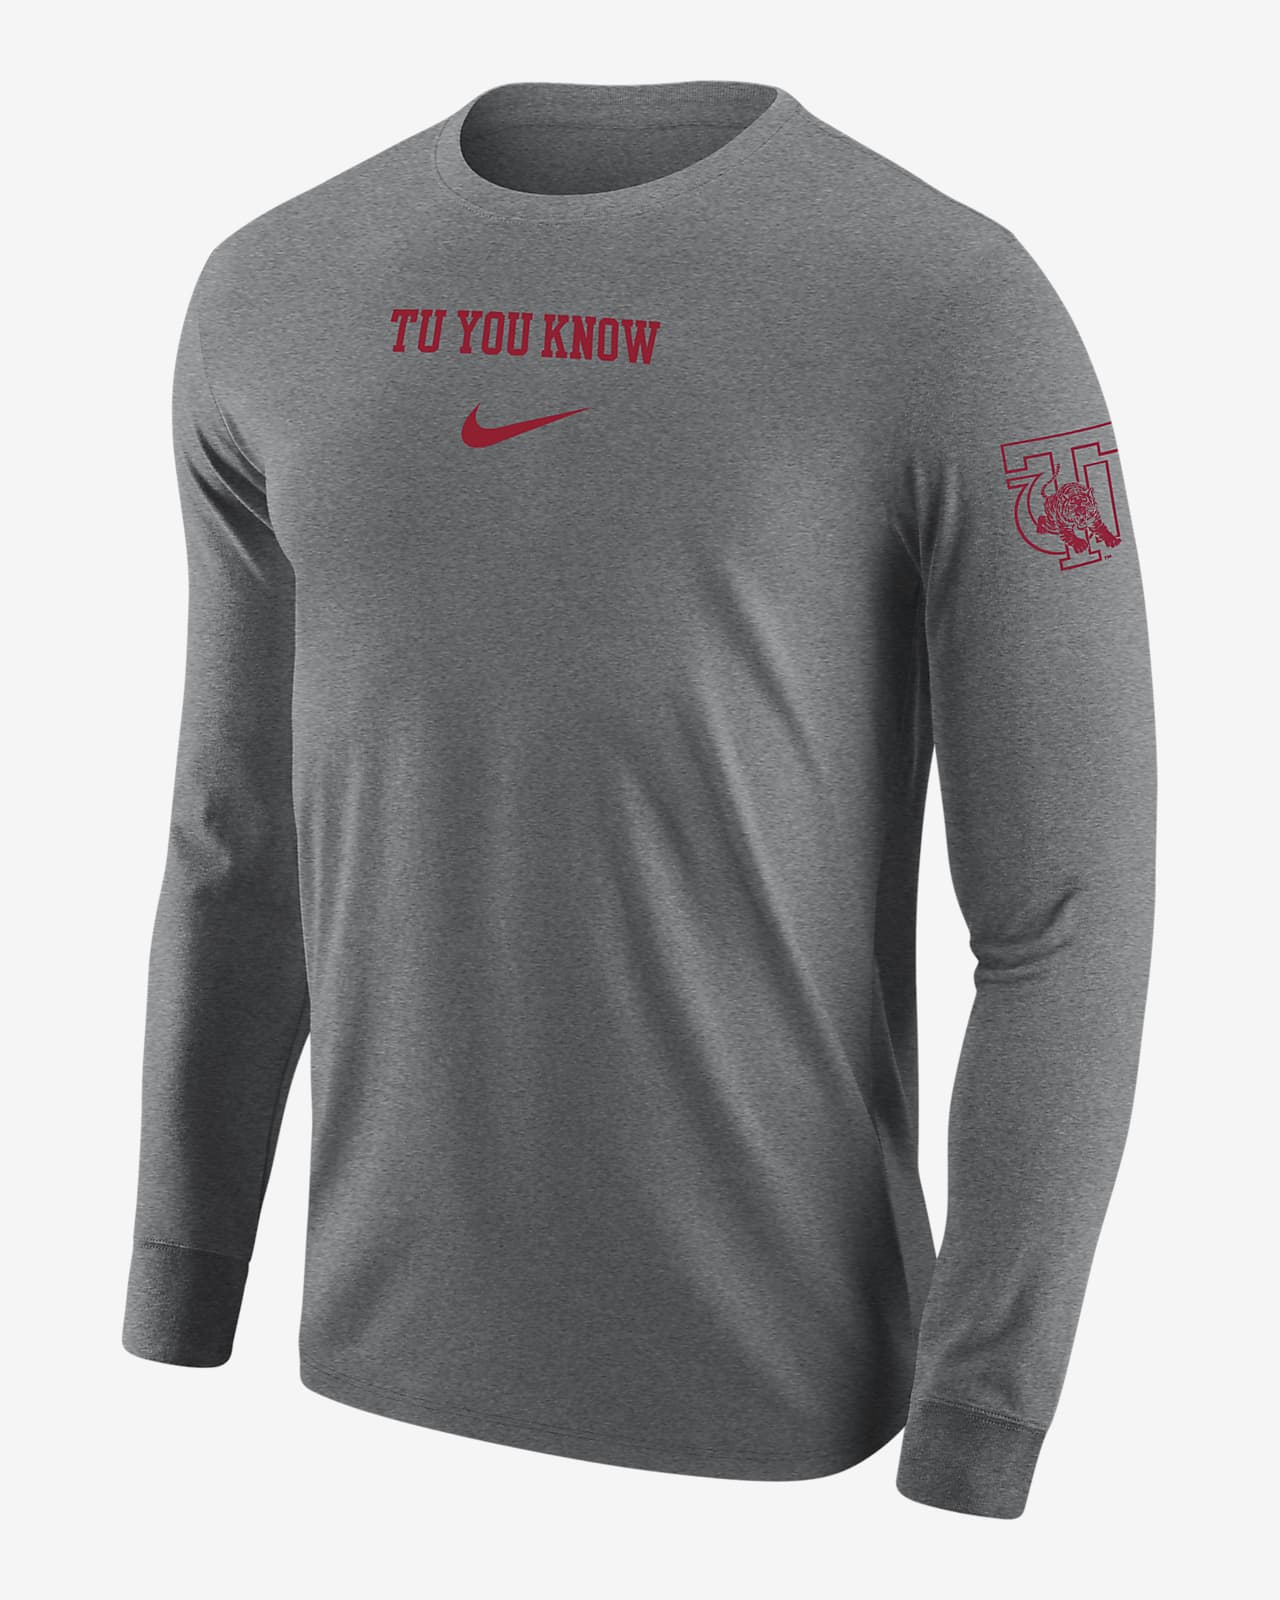 Tuskegee Men's Nike College Long-Sleeve T-Shirt